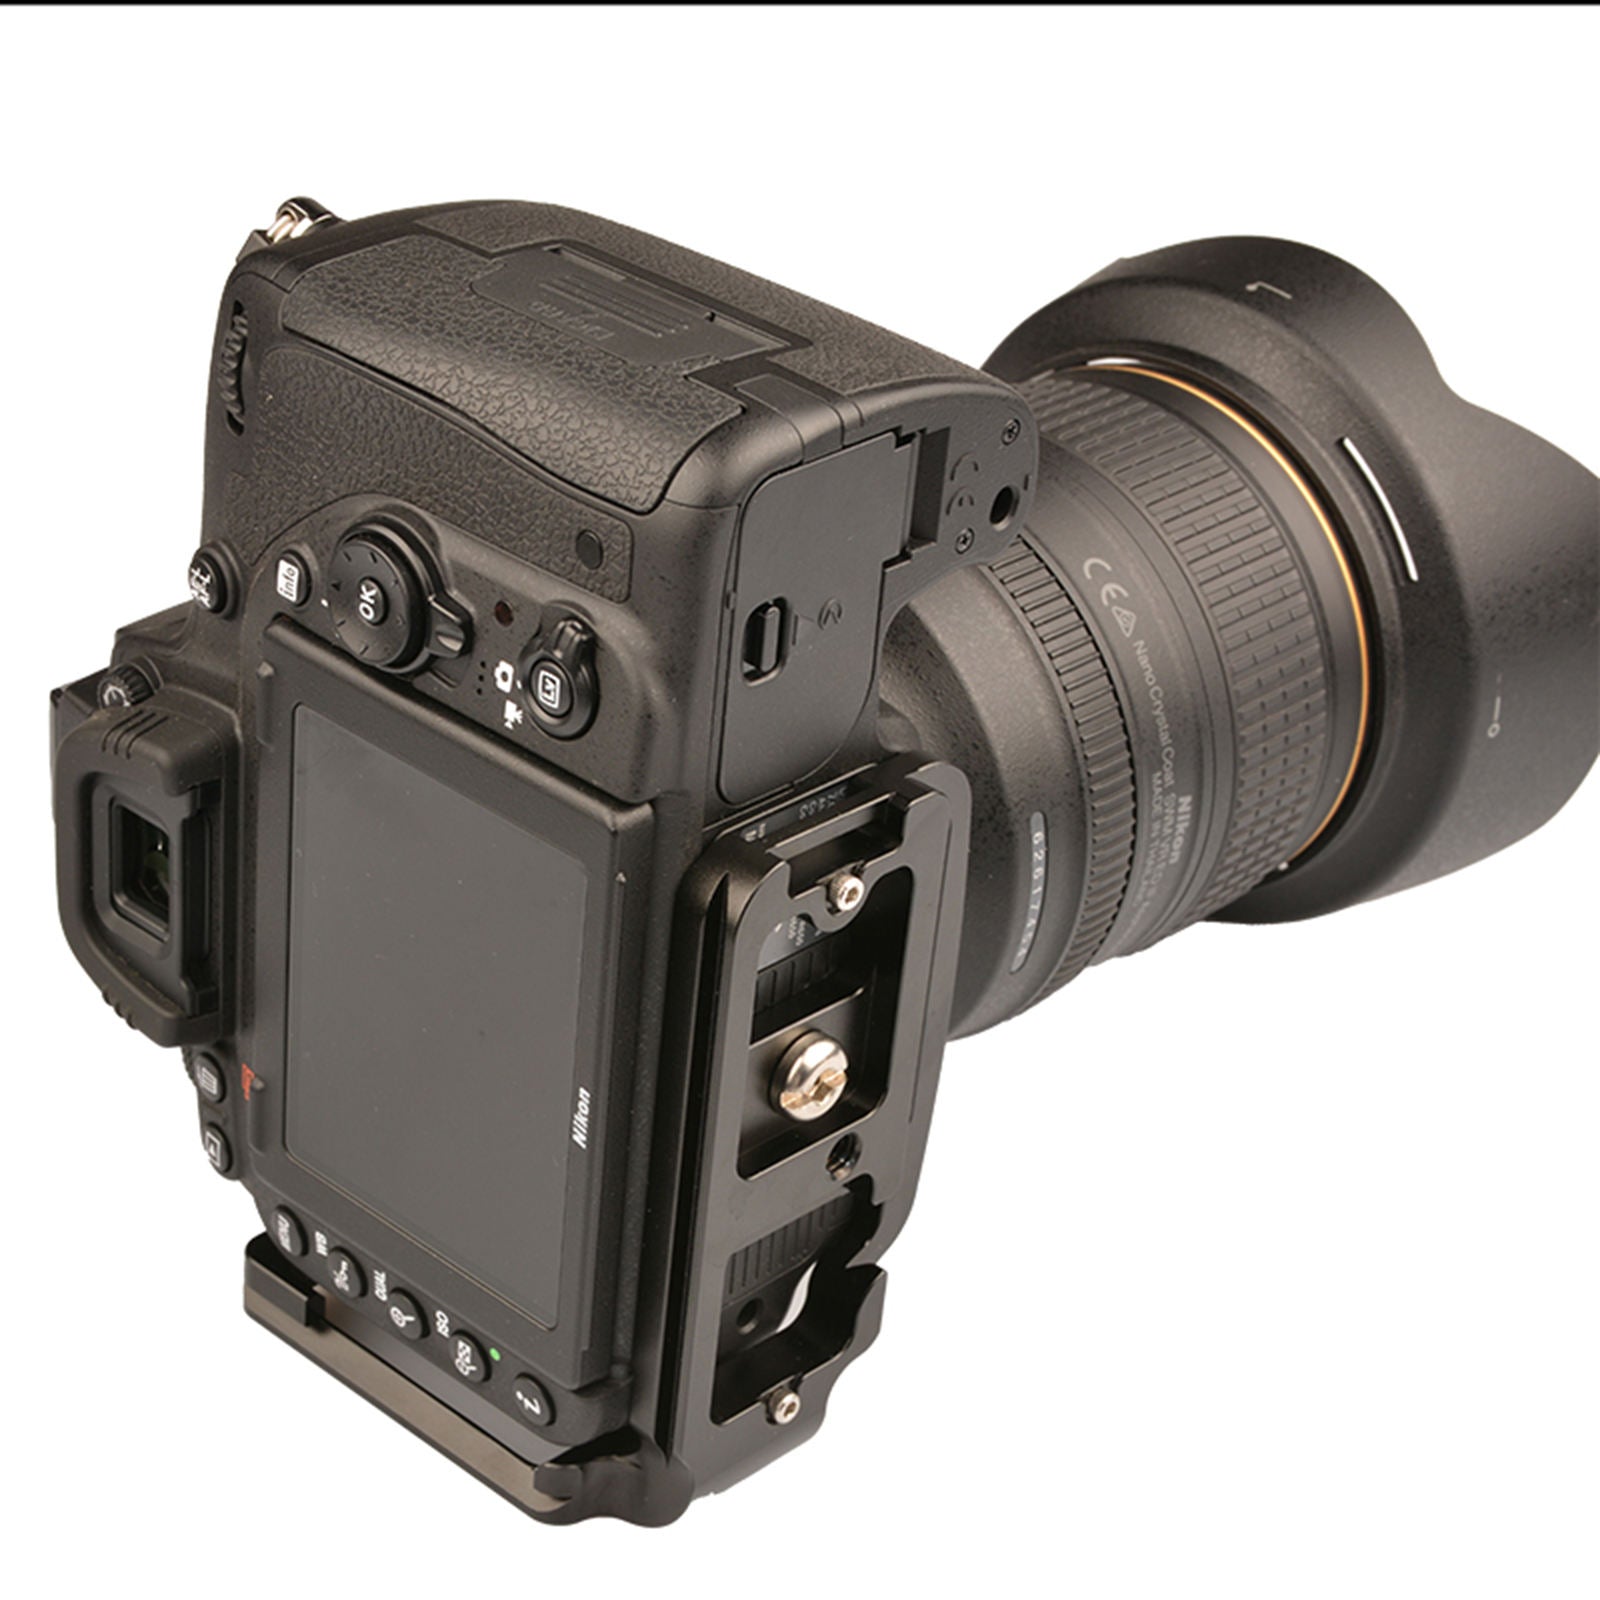 Vertical Plate L Bracket Holder for Nikon D750 1/4 Inch Screw Accessories